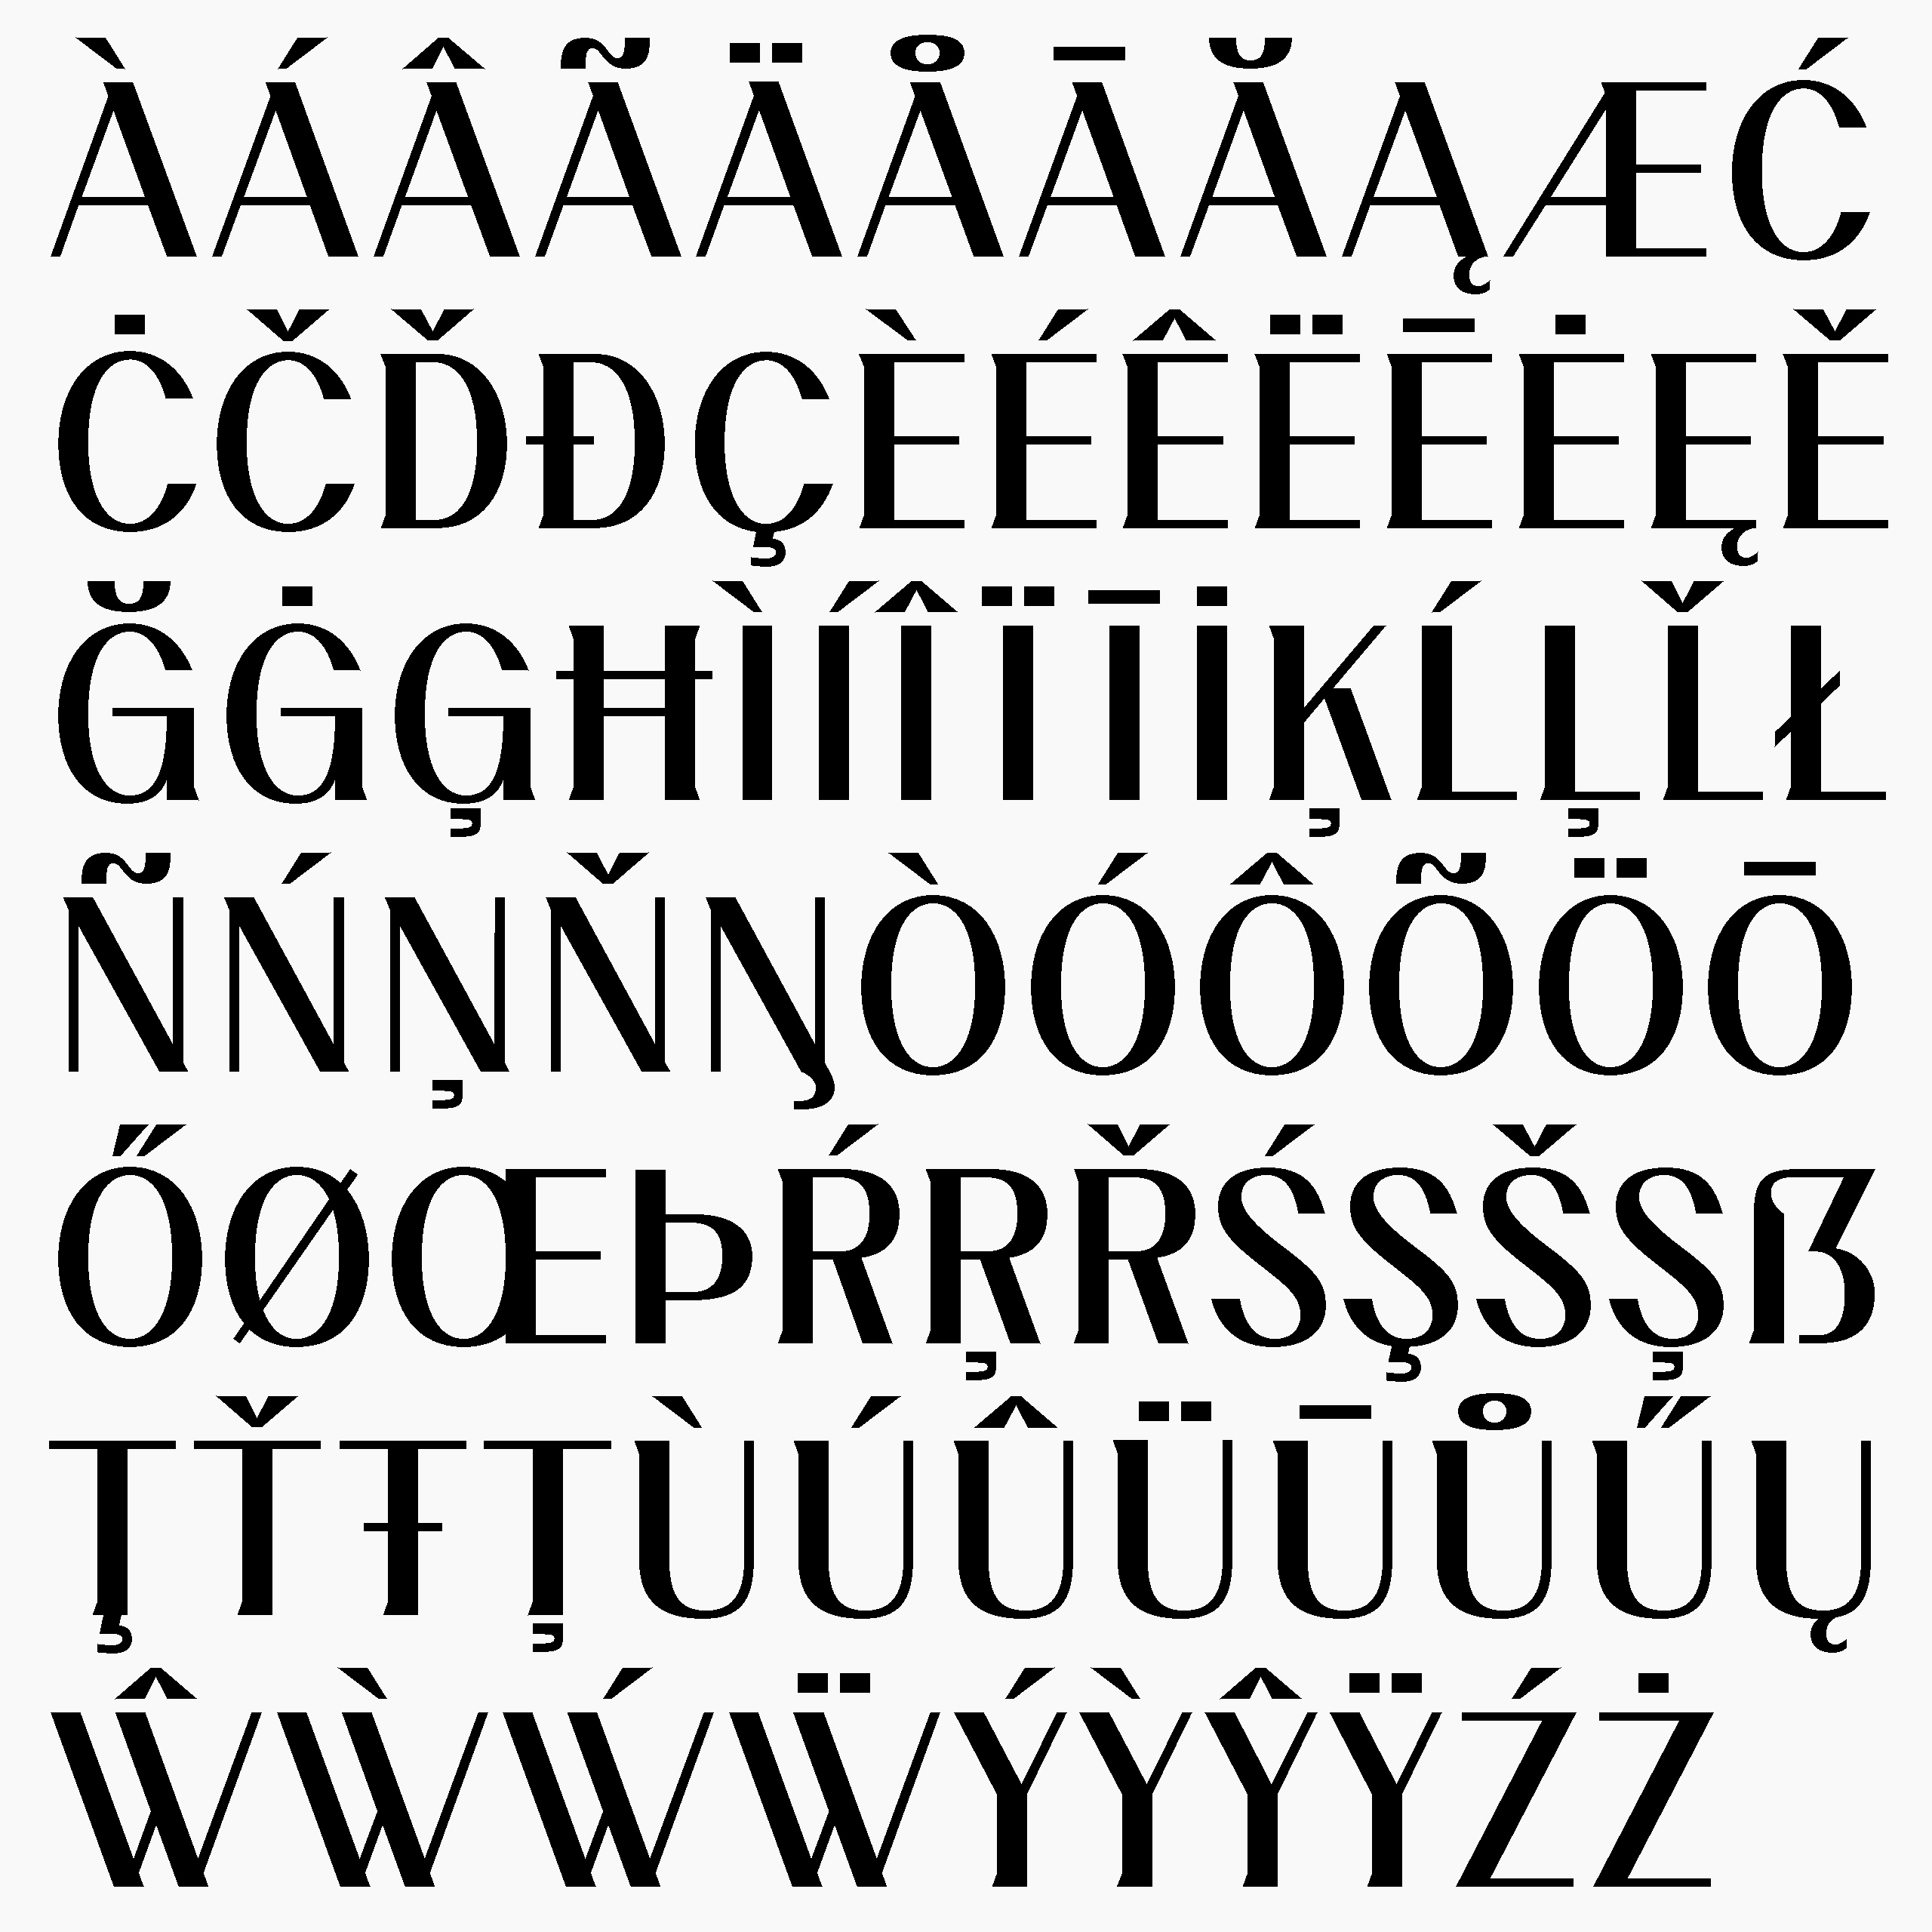 Daniel-Stuhlpfarrer_typedesign_graphicdesign_custom-font_custom-typeface_typography_Delia-Baum_Kasanowa_4